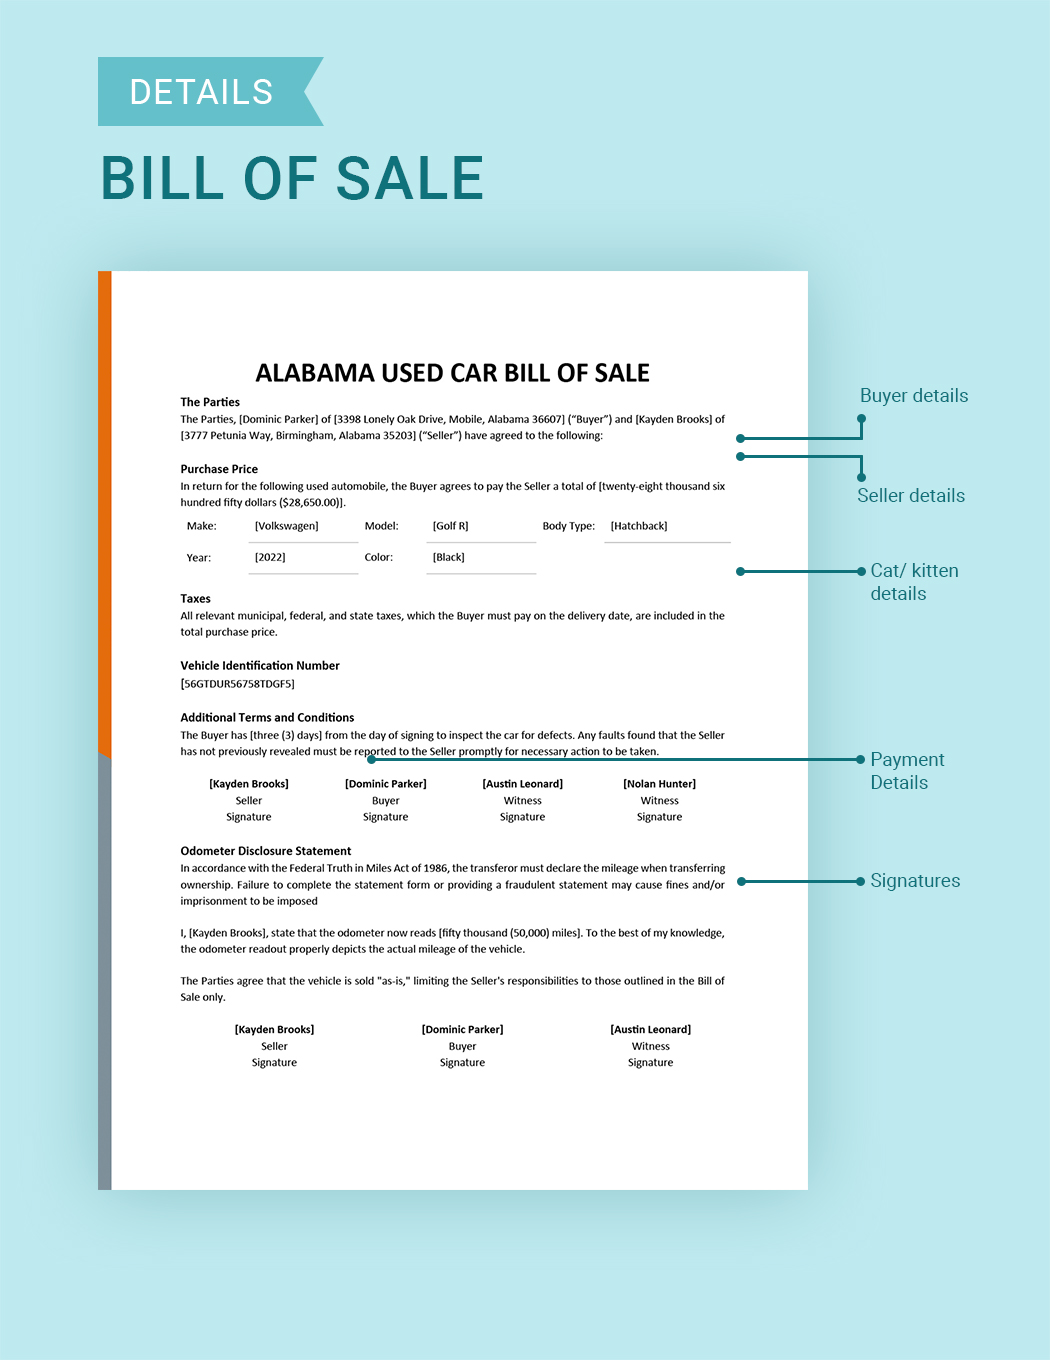 Alabama Used Car Bill of Sale Template